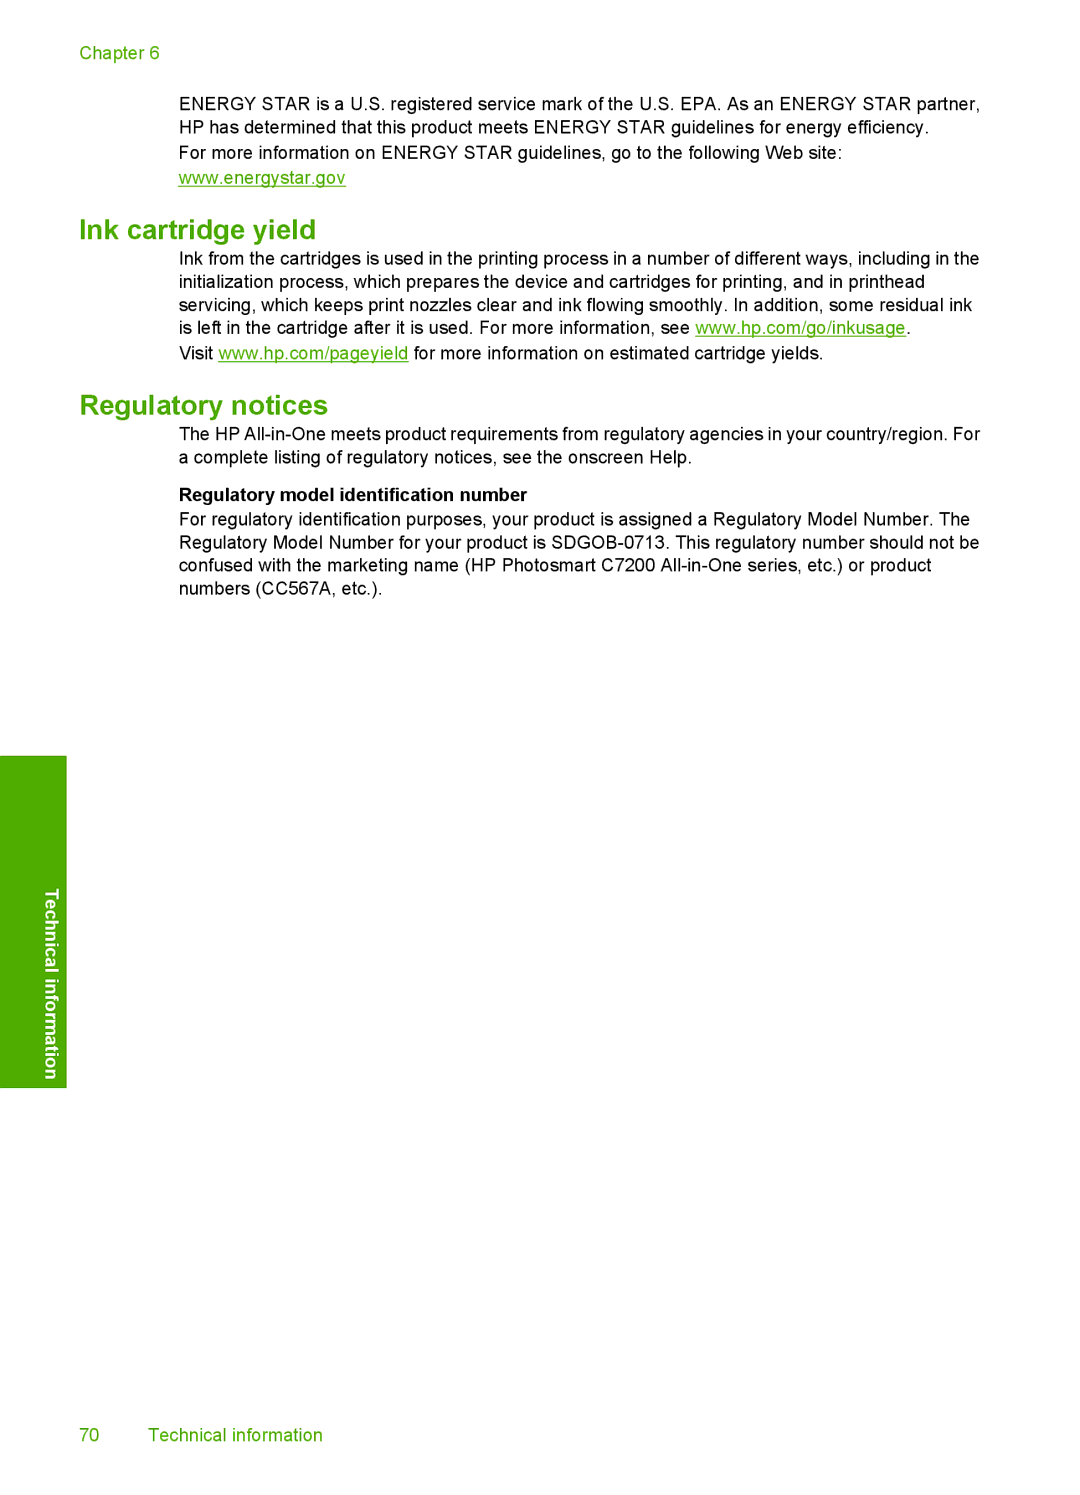 HP C7250, C7288, C7280 manual Ink cartridge yield Regulatory notices, Regulatory model identification number 